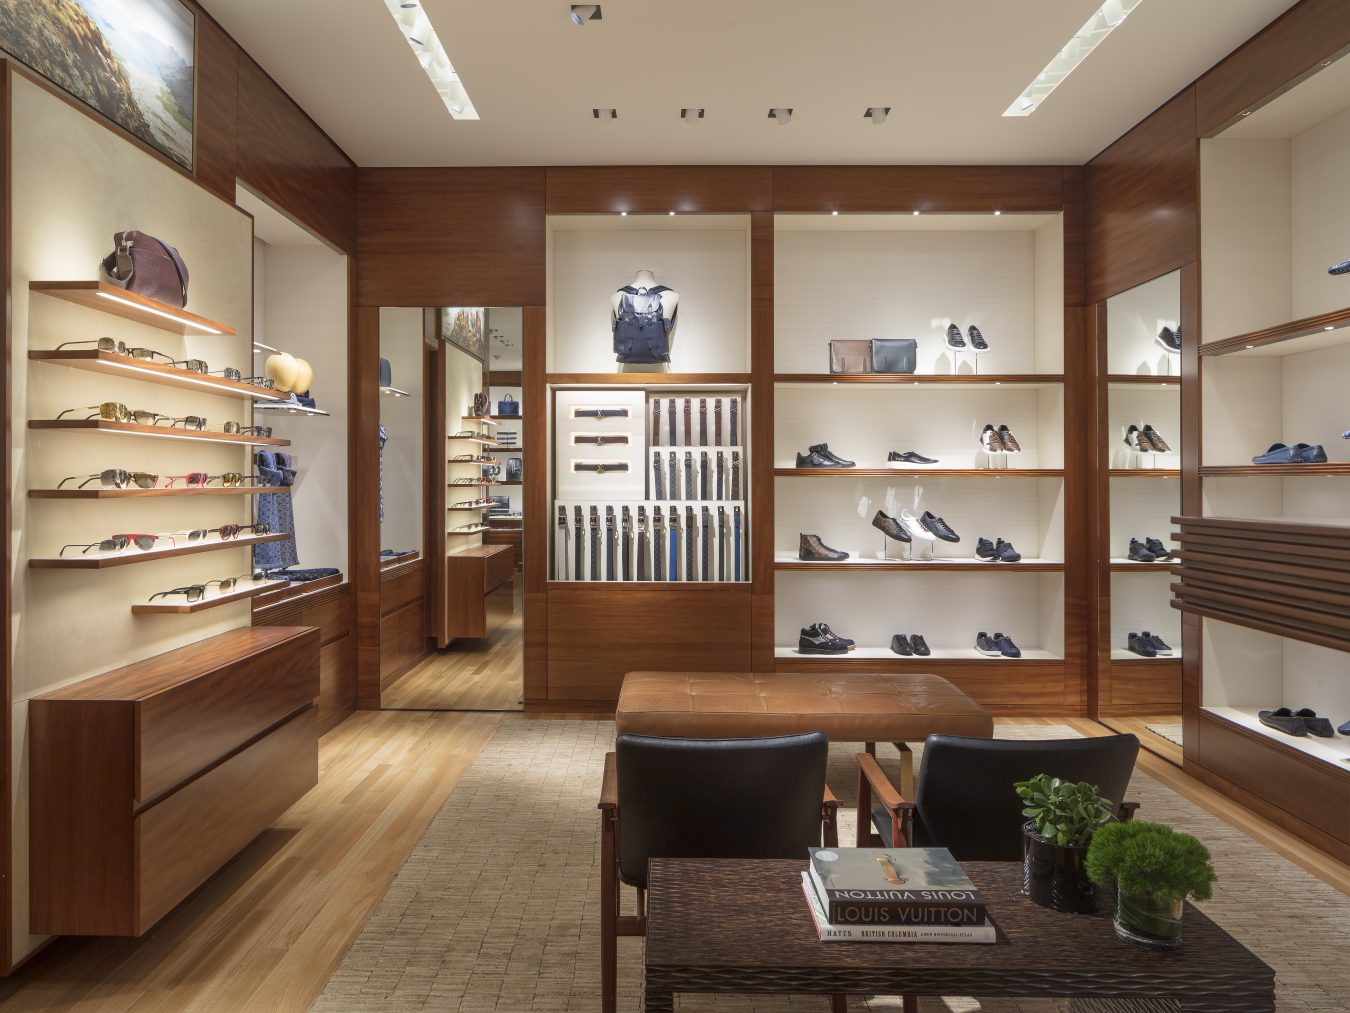 Louis Vuitton Holt Renfrew Vancouver Store in Vancouver, Canada